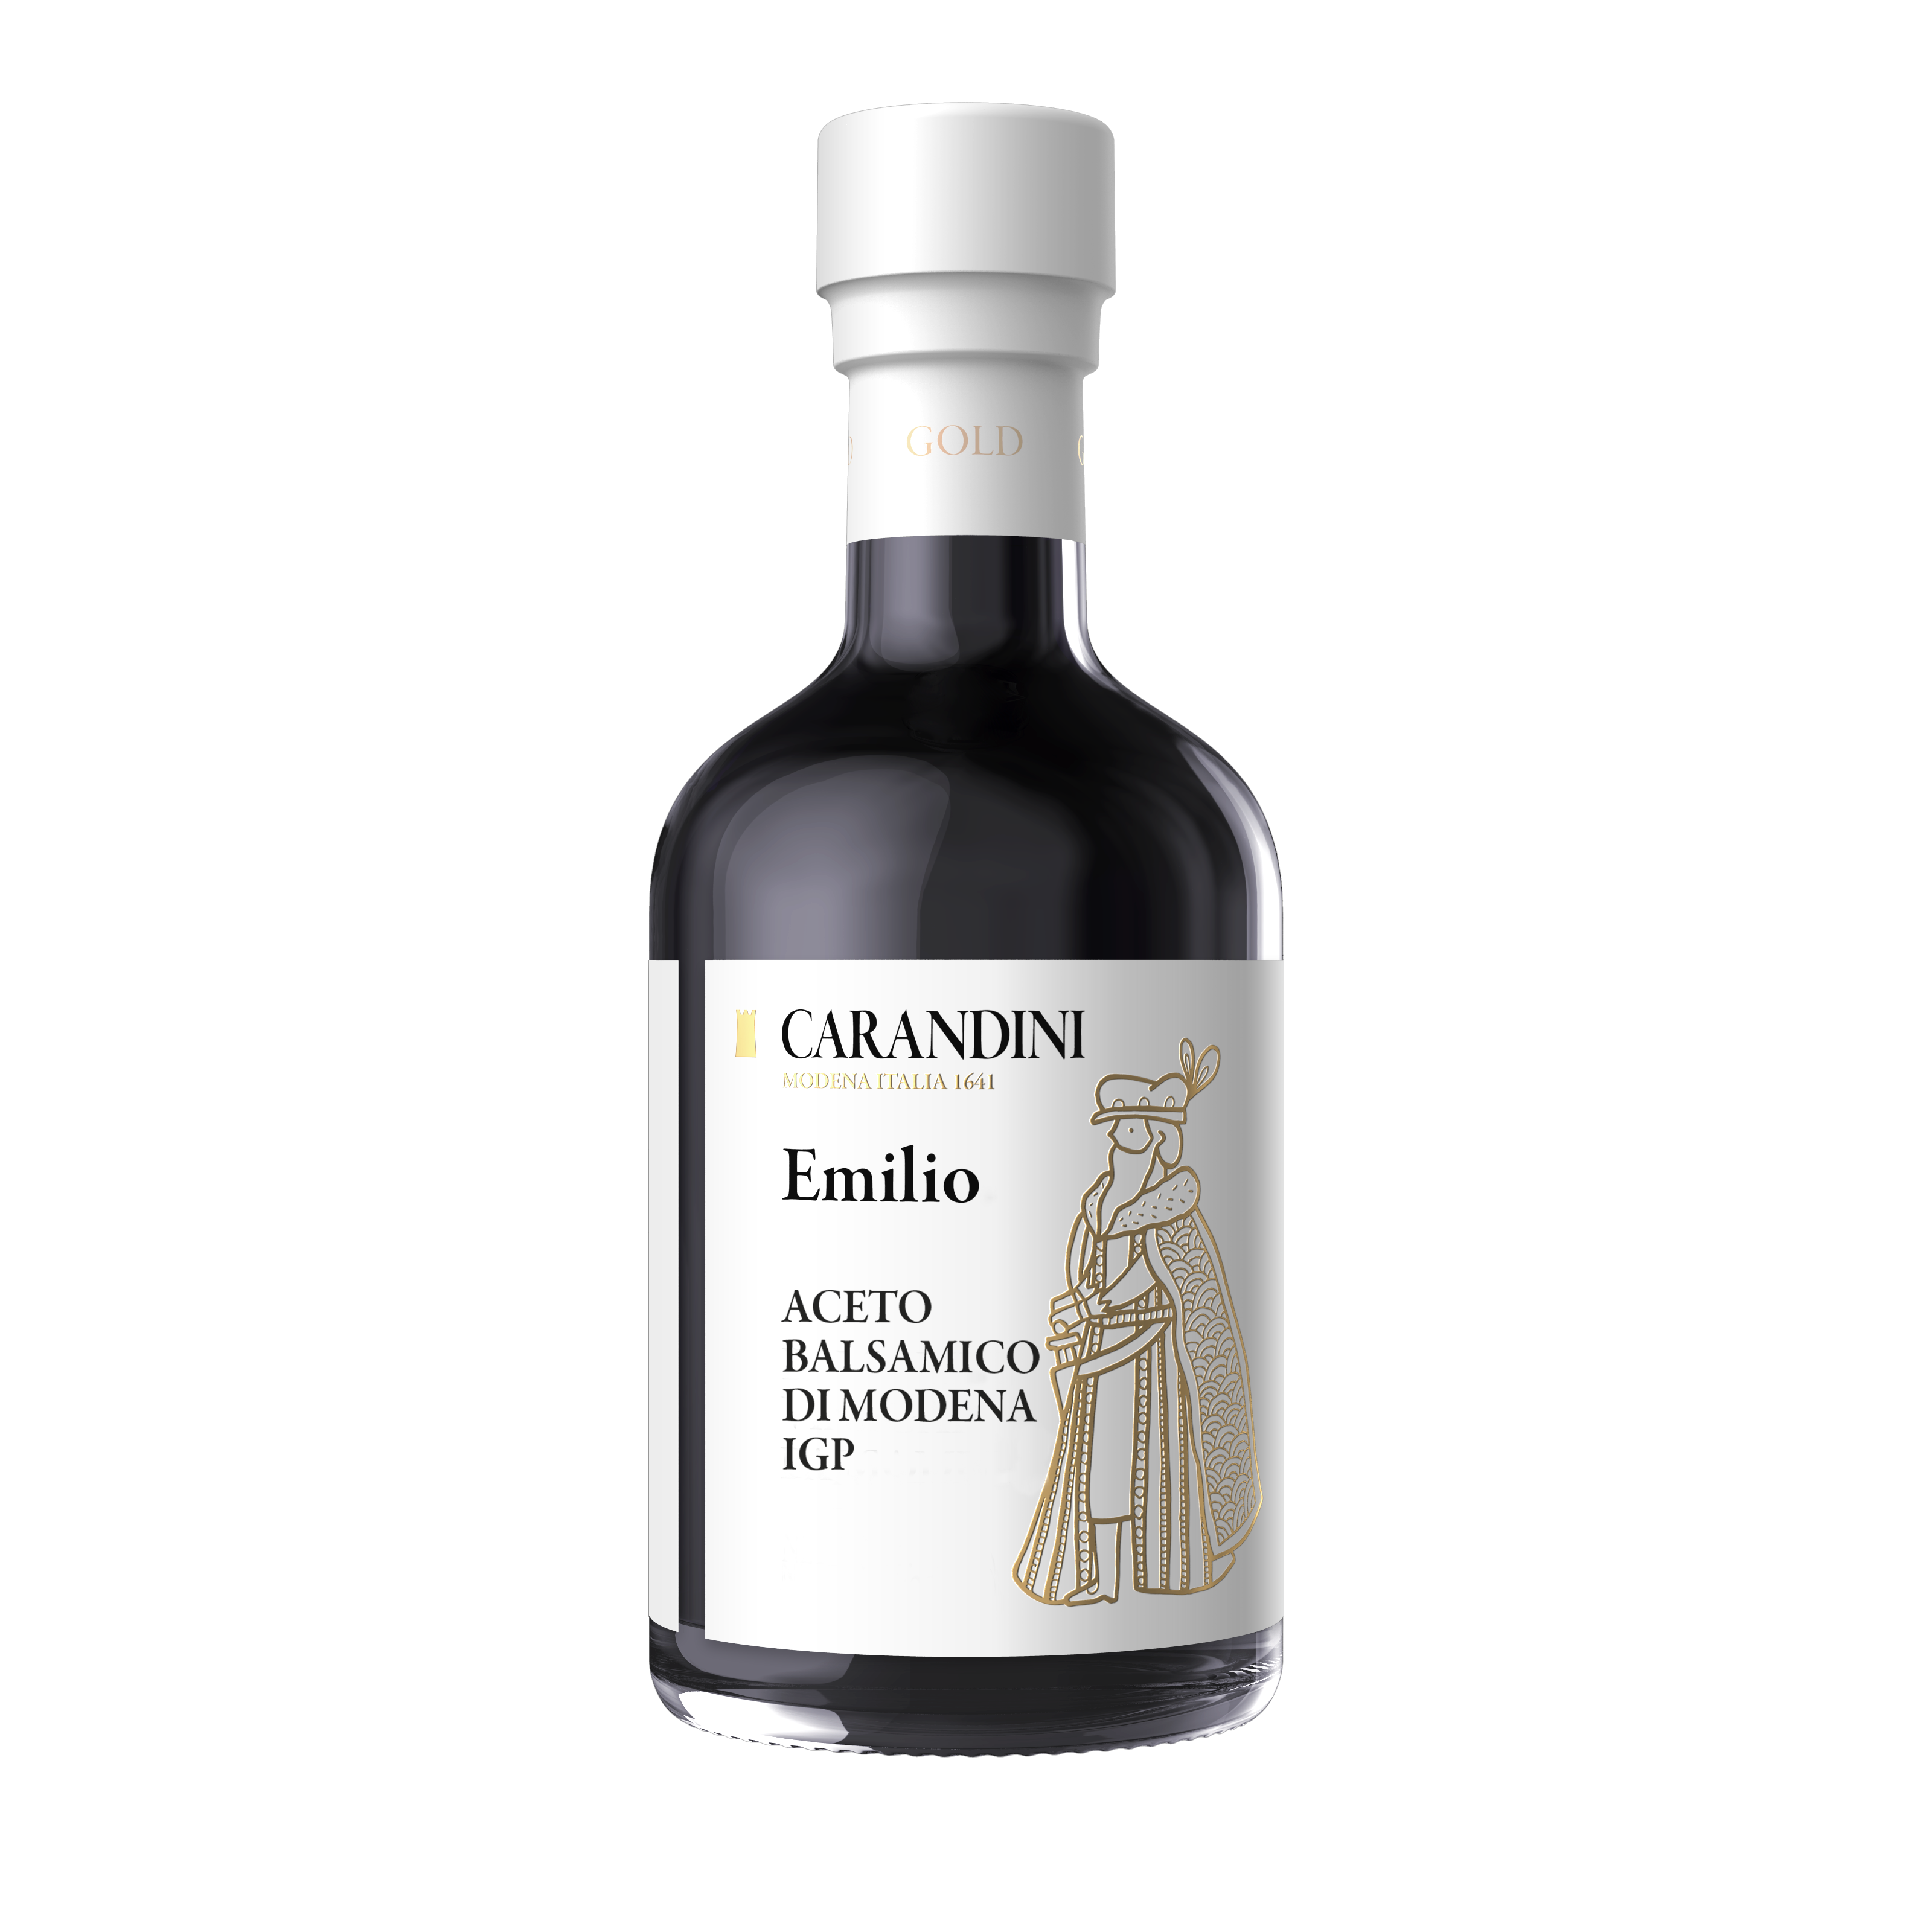 Carandini Emilio Gold Balsamic Vinegar of Modena